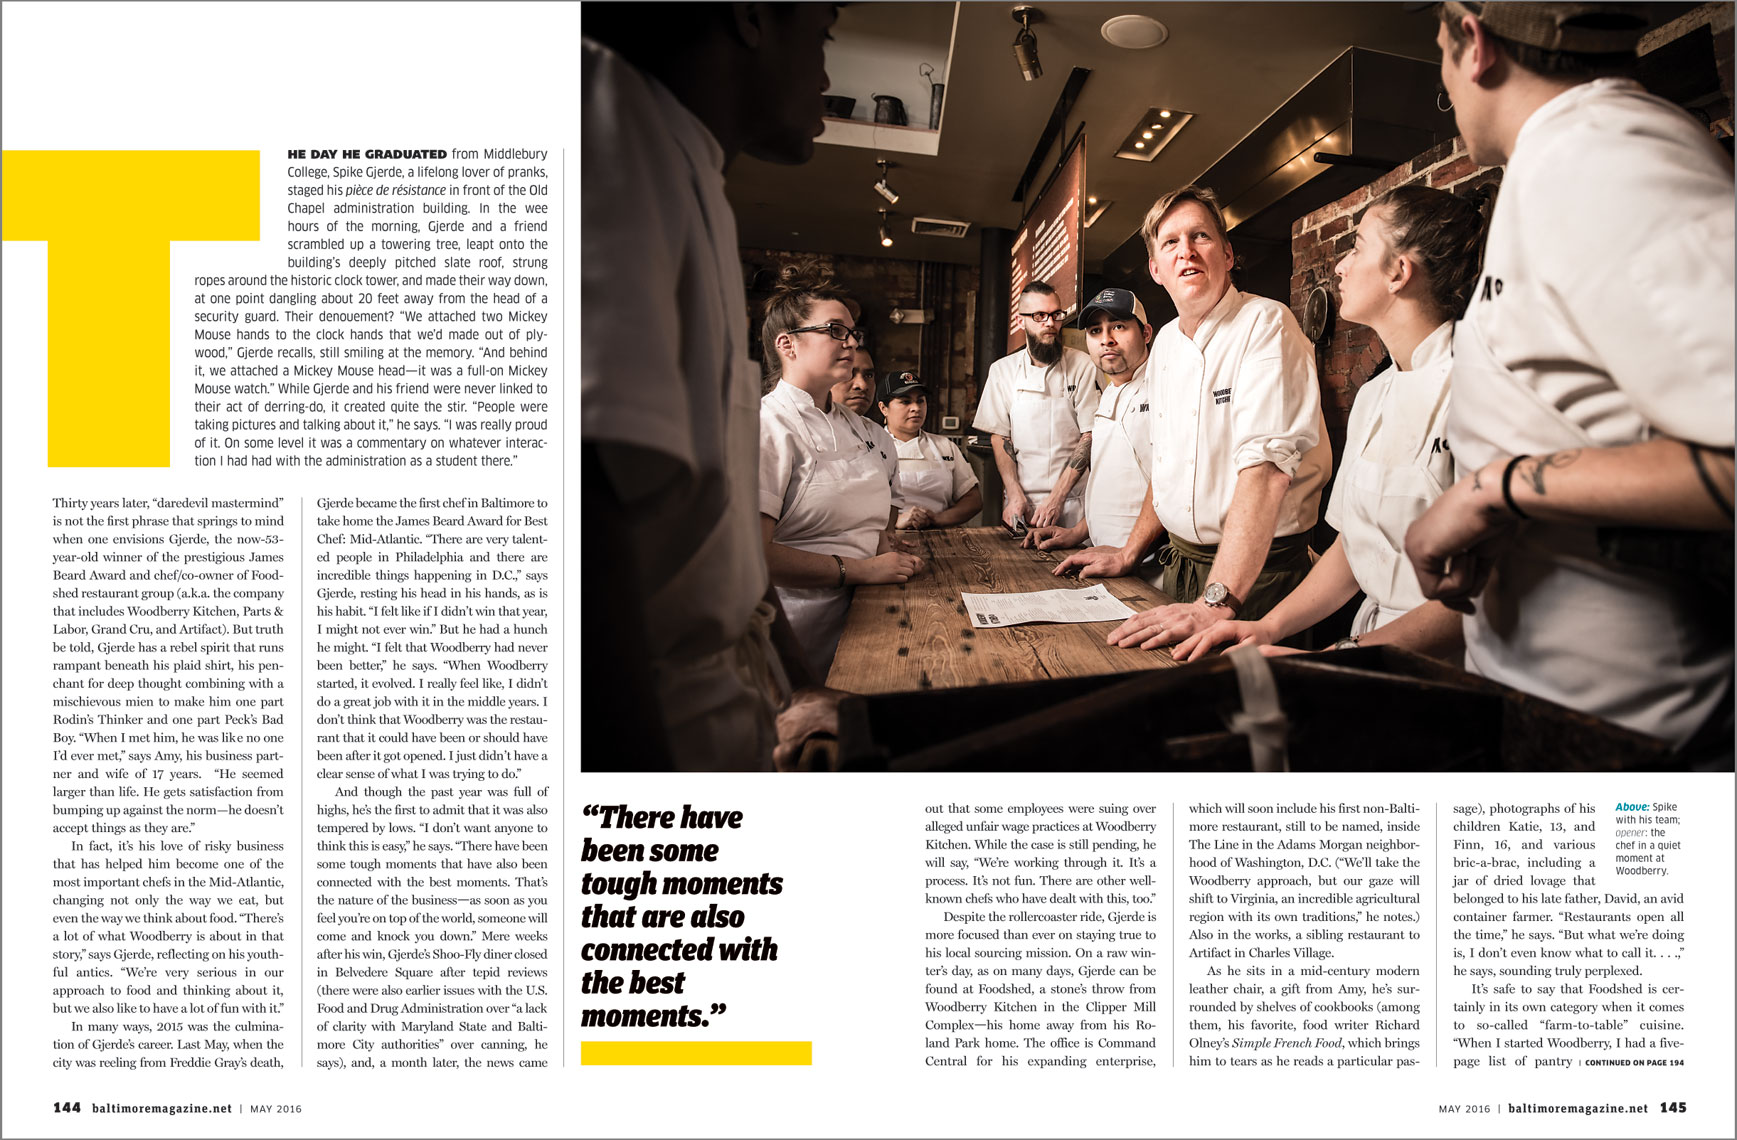 Baltimore Magazine spread featuring James Beard winning chef Spike Gjerde